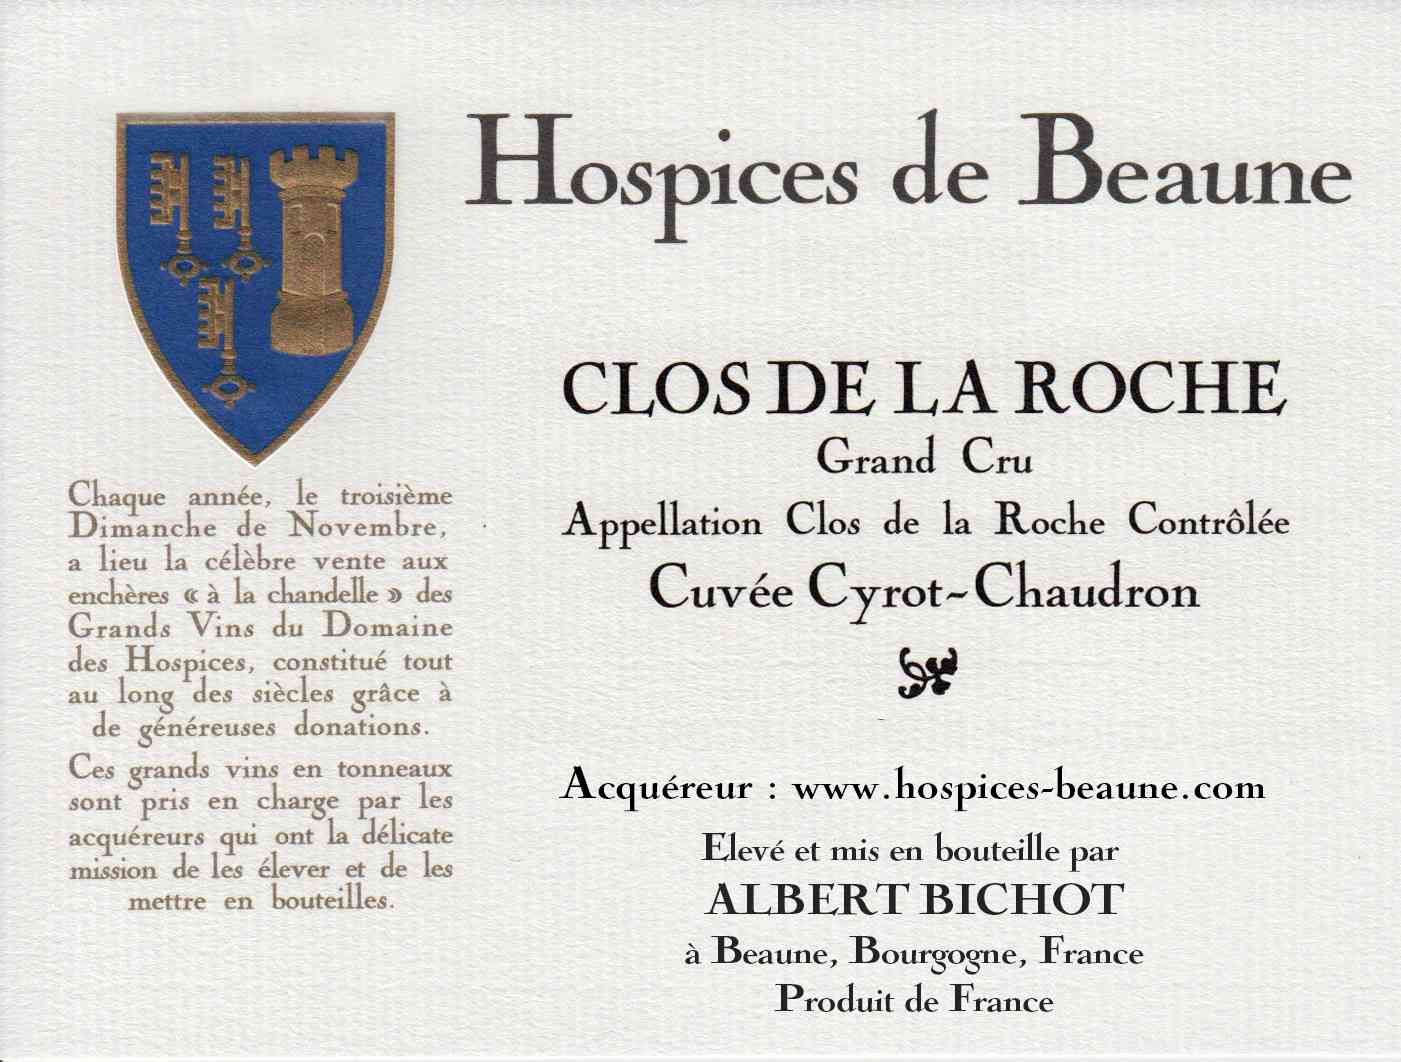 Encheres-auction-HospicesdeBeaune-AlbertBichot-ClosdelaRoche-grandcru-Cuvee-CyrotChaudron